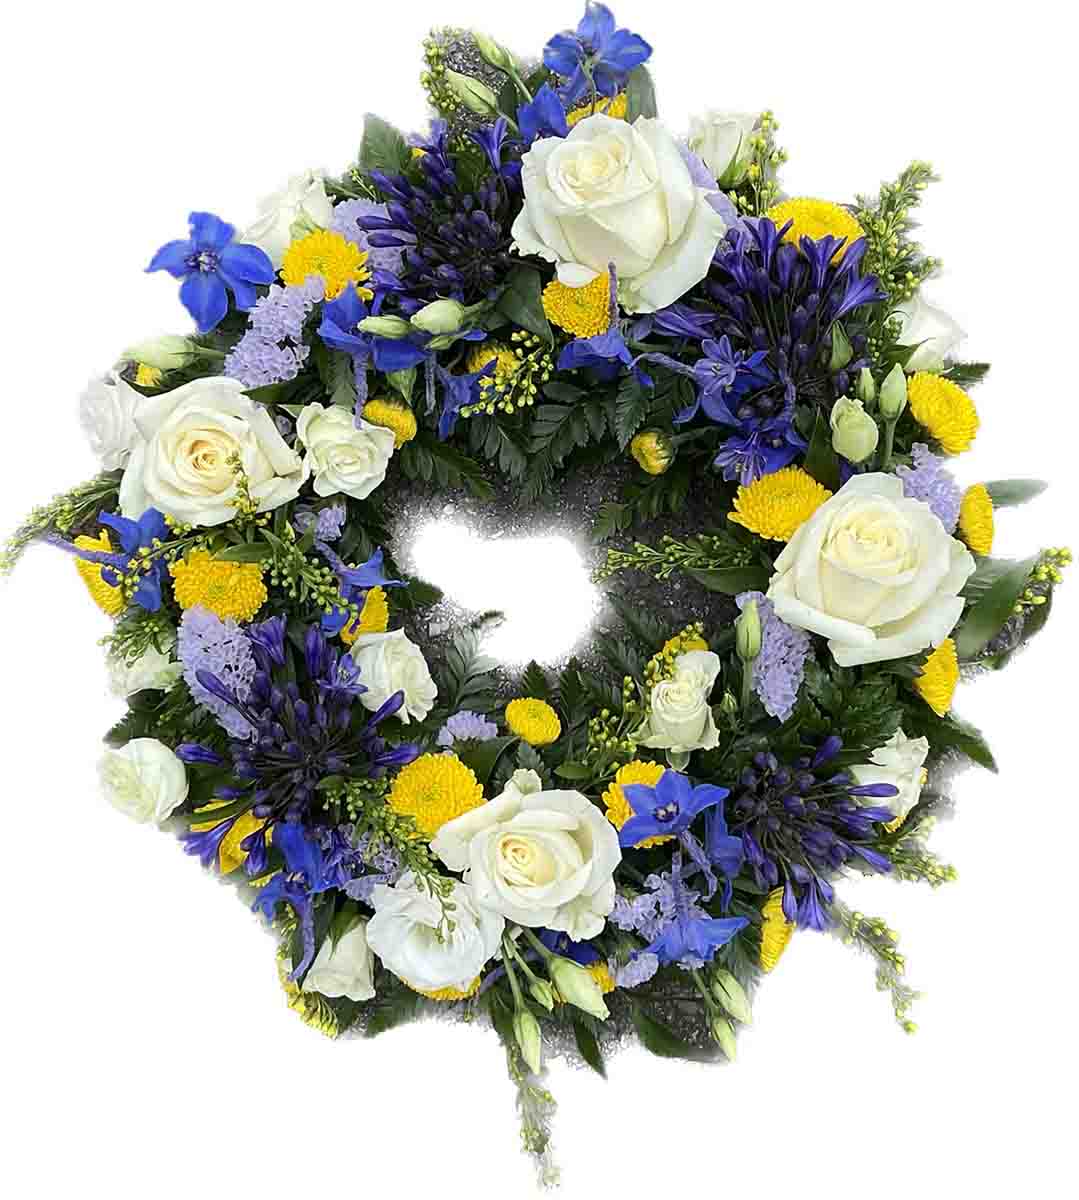 White and purple flower wreath